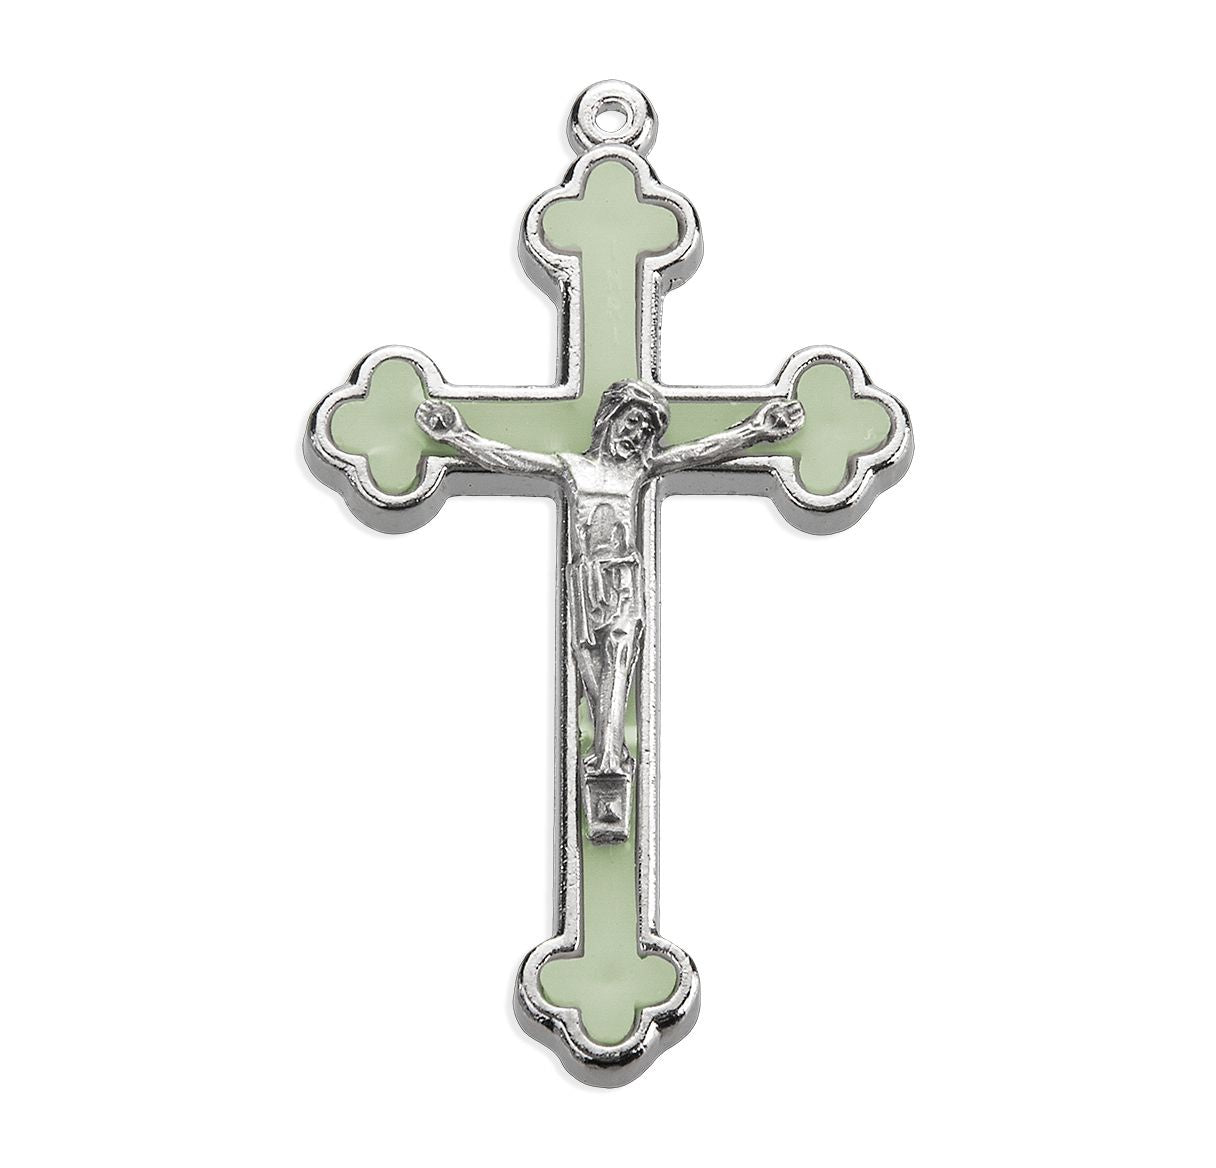 Luminious Crucifix - Cloverleaf Design 2"